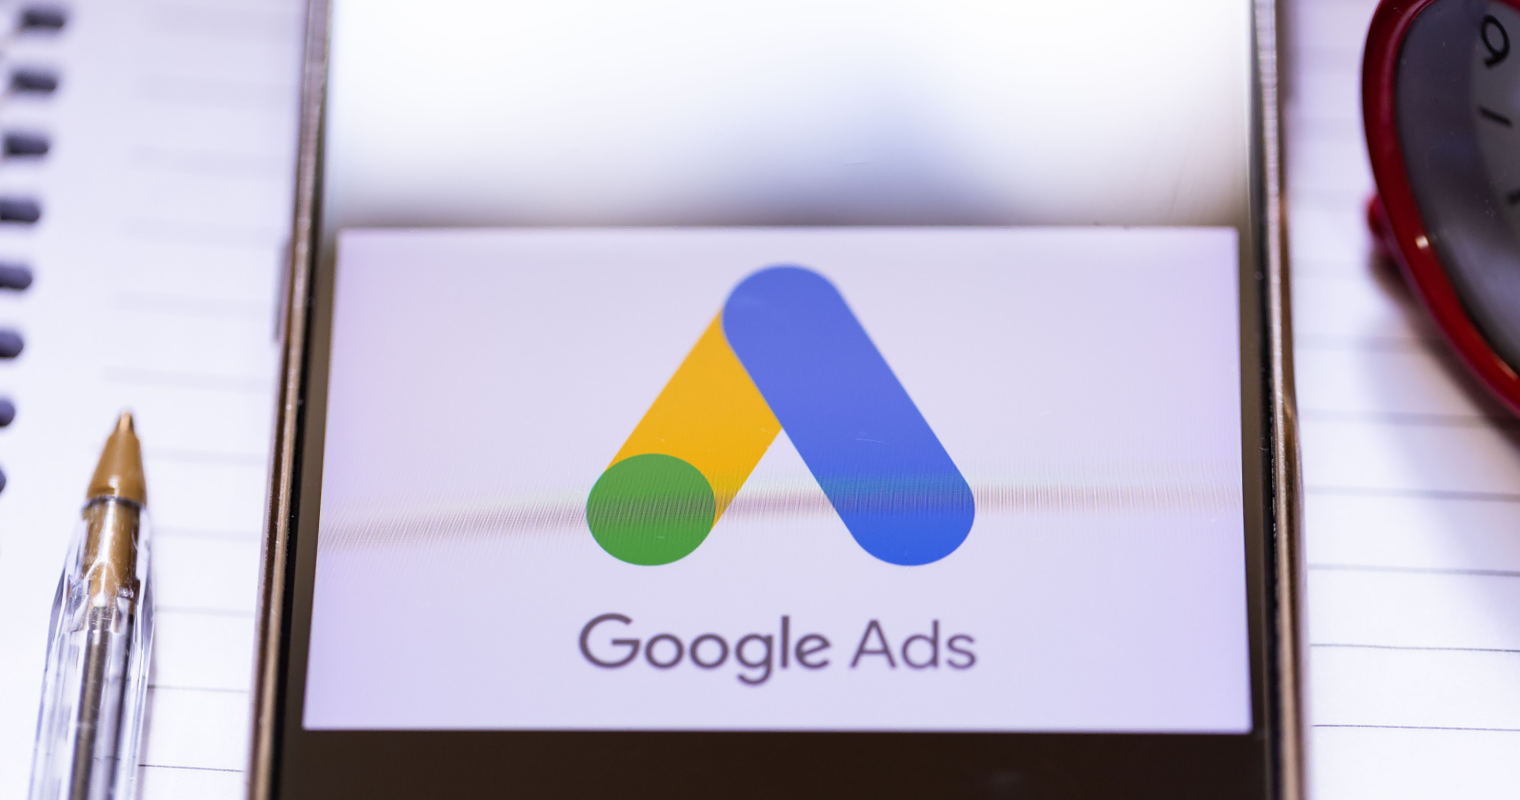 google seo 和 google ads两种谷歌推广哪种更适合刚起步的公司